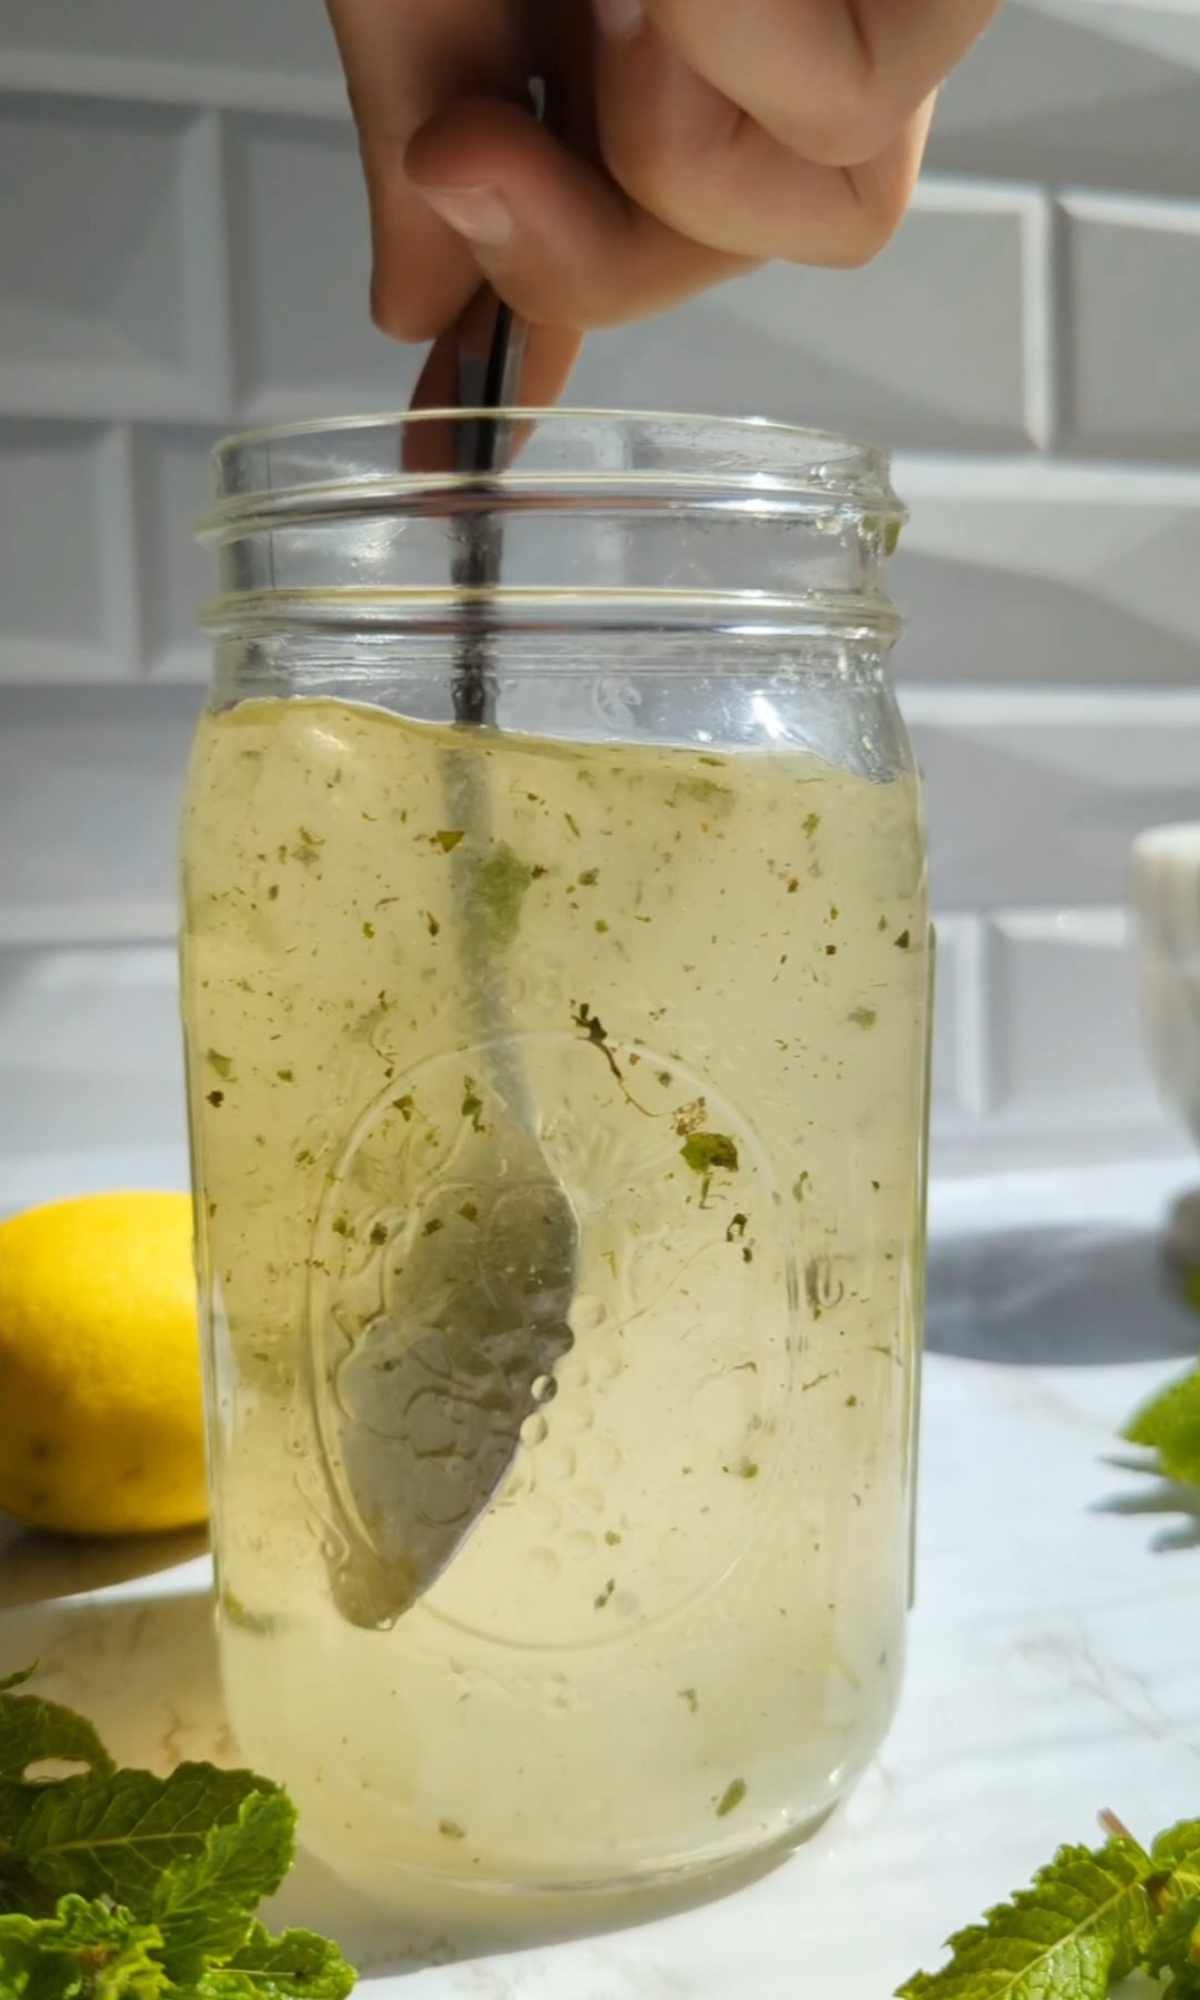 fresh muddled mint leaves being stirred into homemade lemonade.